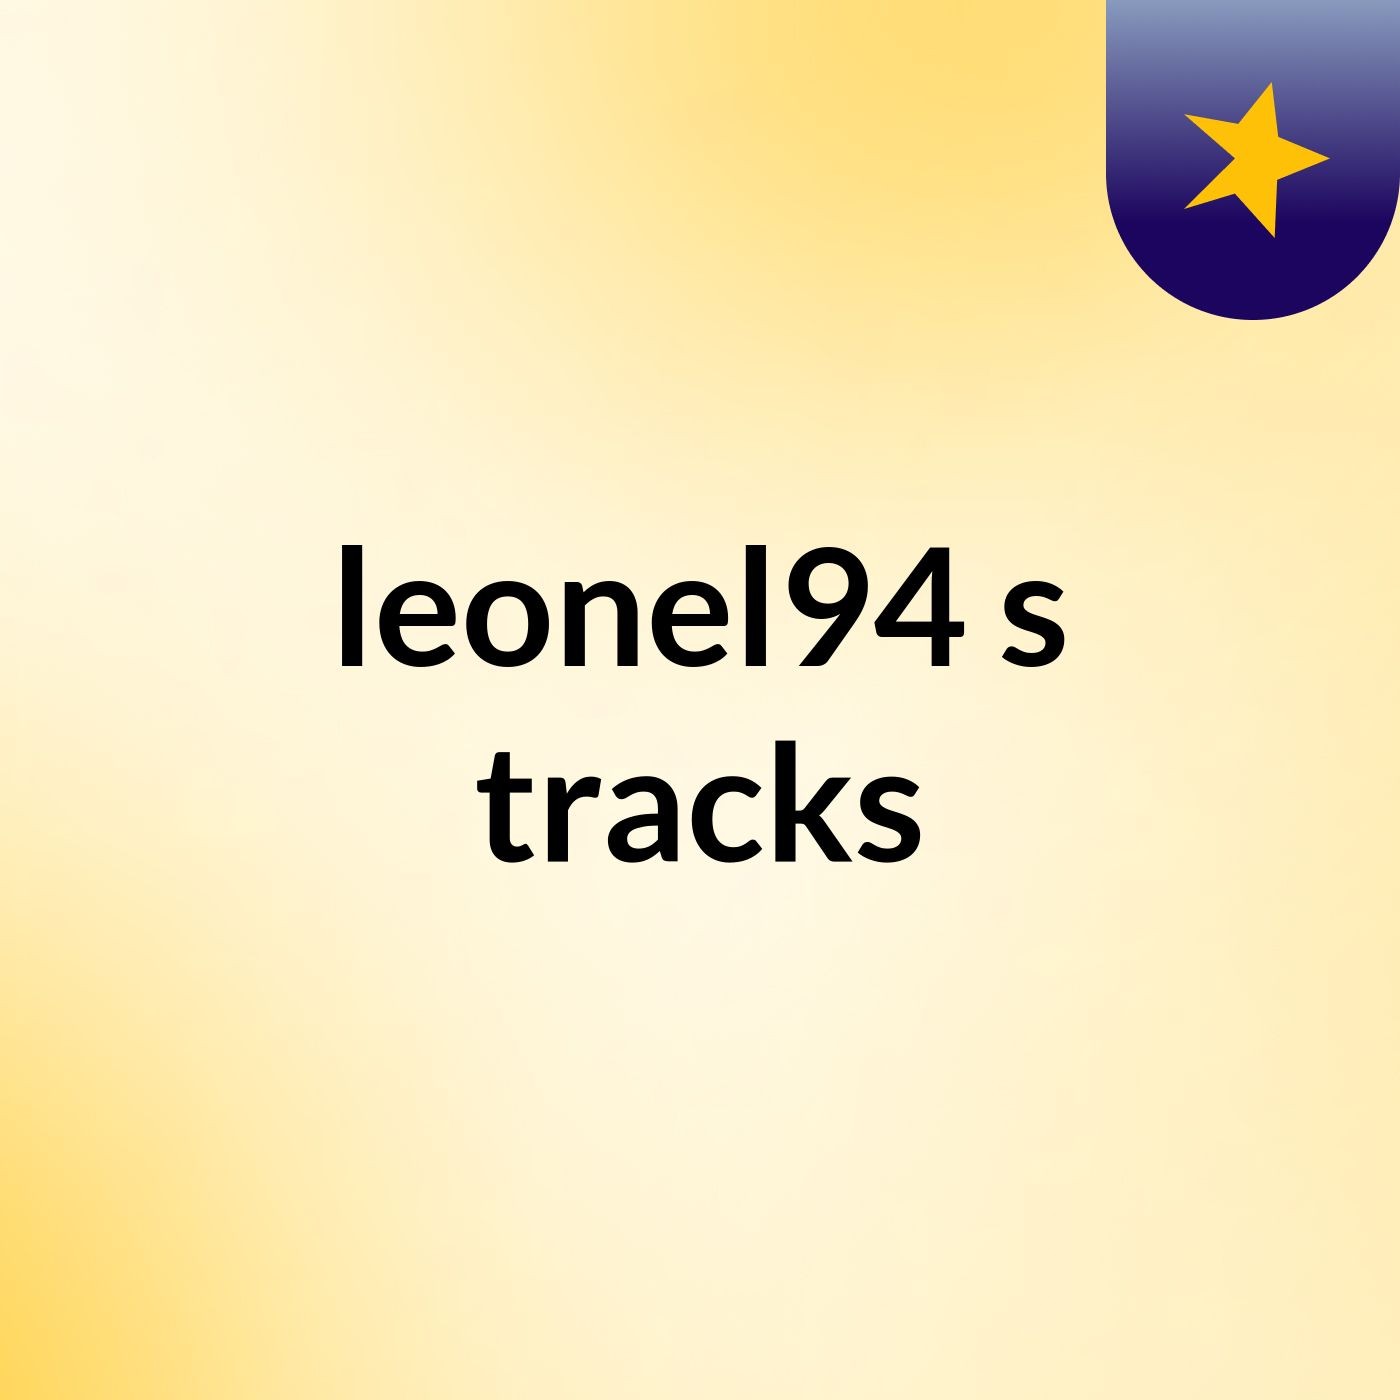 leonel94's tracks